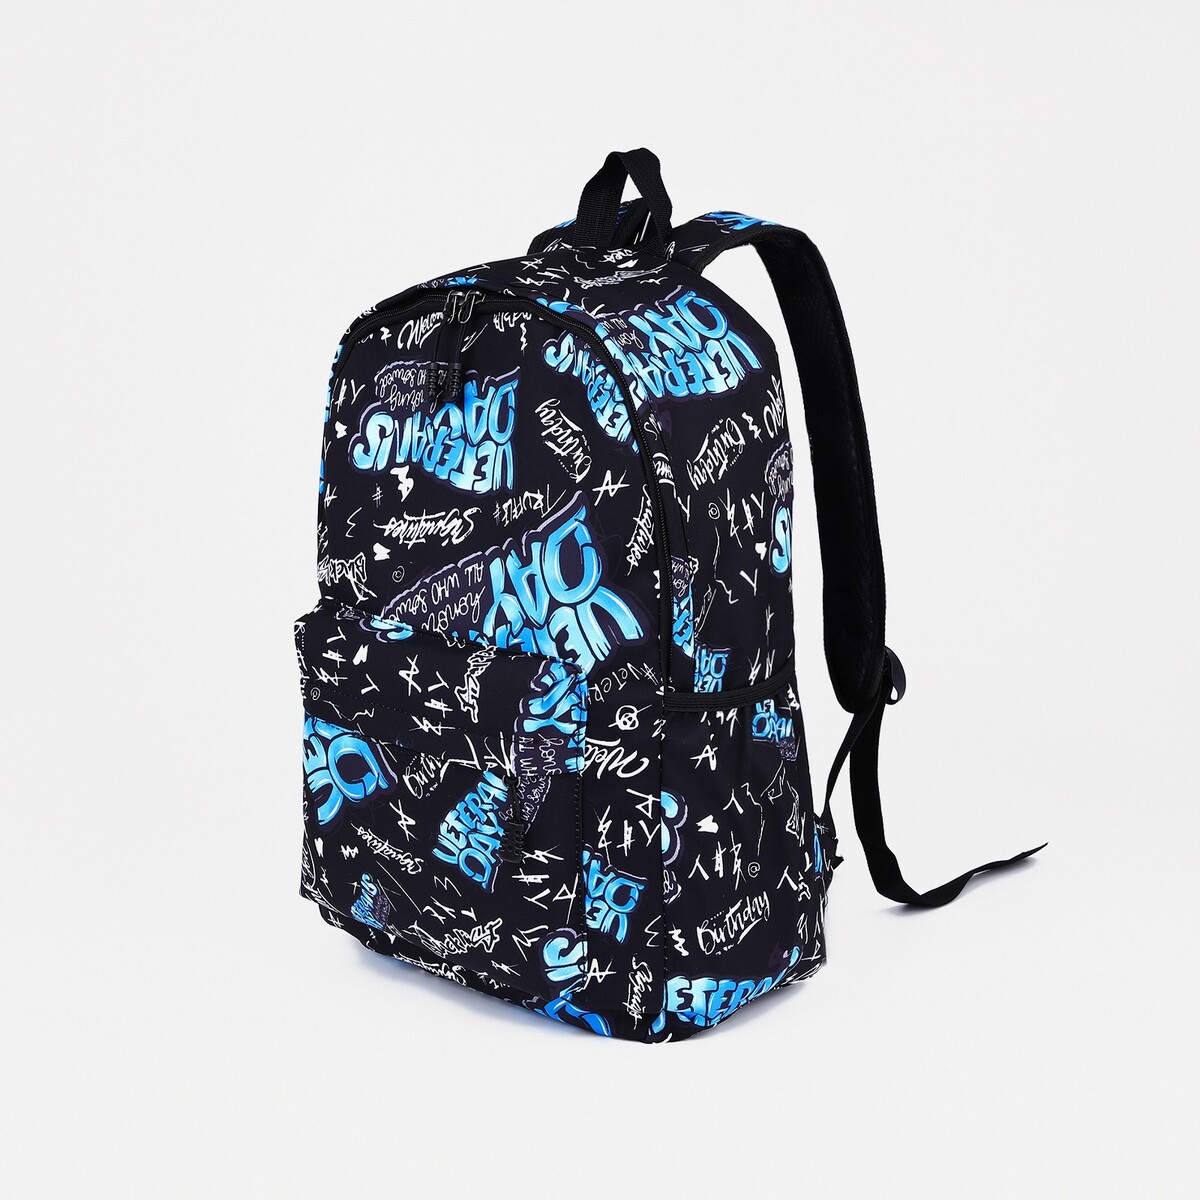 Рюкзак на молнии, 3 наружных кармана, цвет синий/черный рюкзак на молнии 3 наружных кармана малиновый